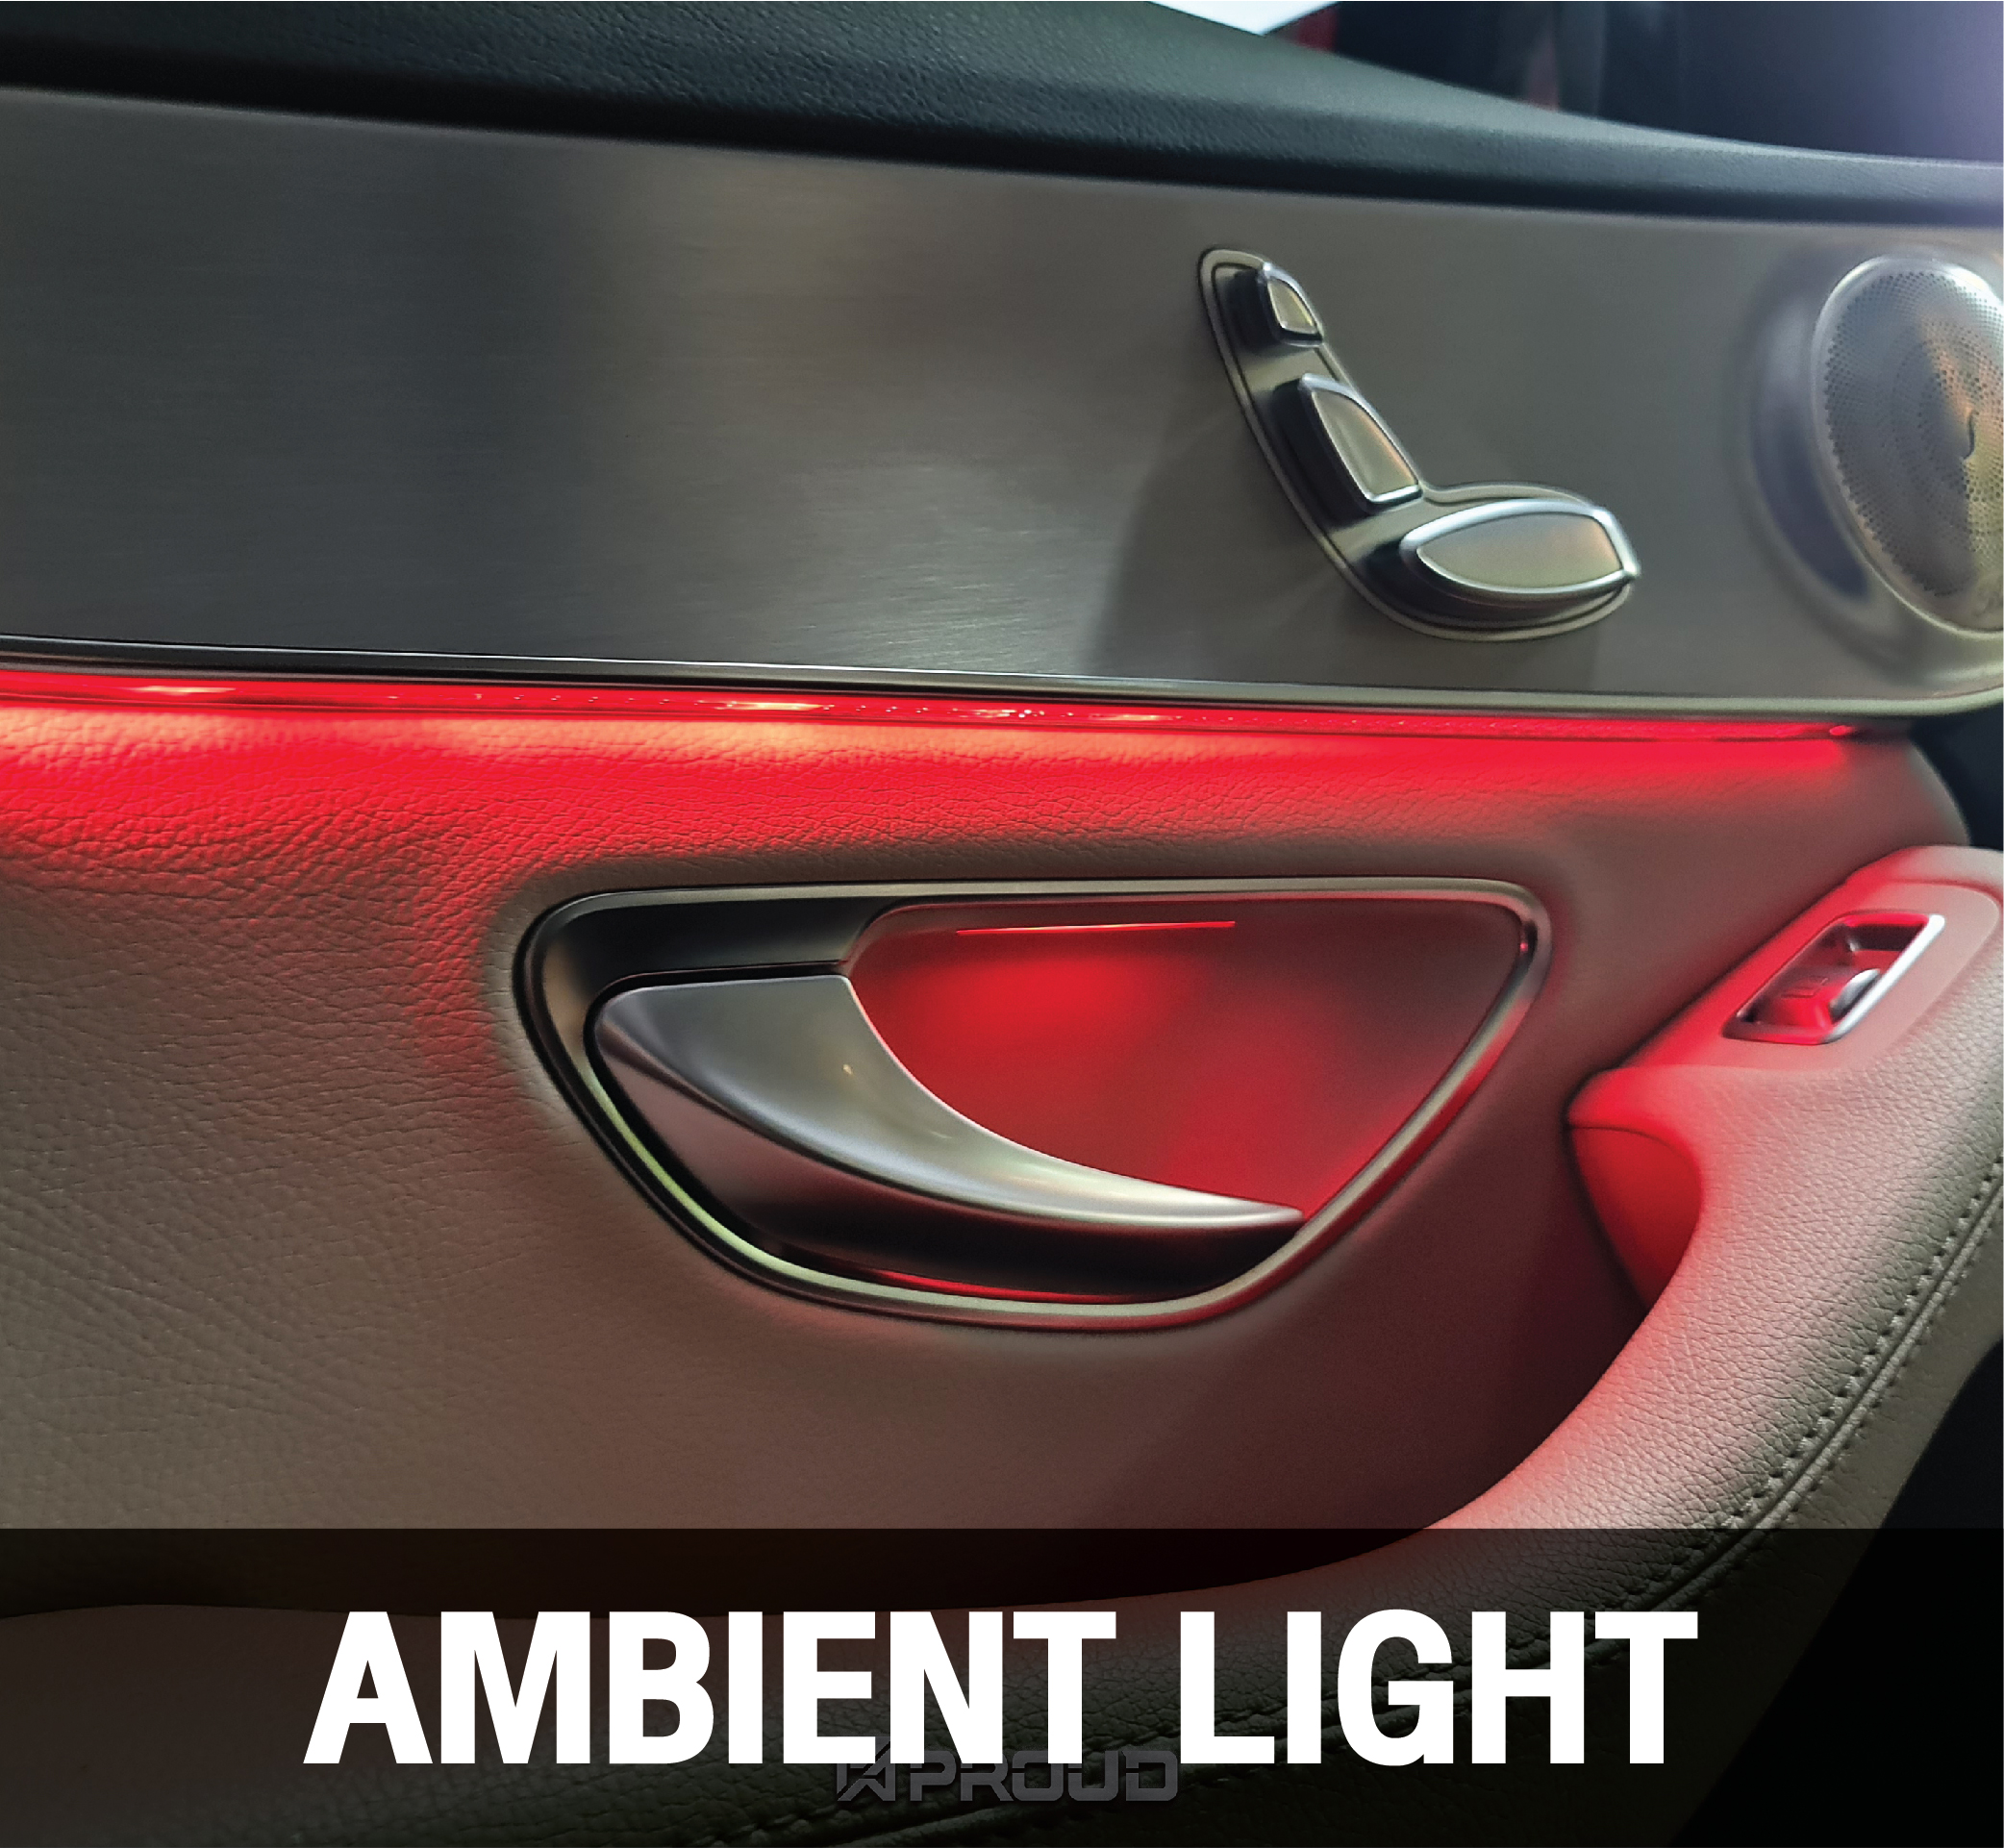 Ambient Light - ไฟแอมเบี้ยนตรงรุ่น BENZ BMW AUDI